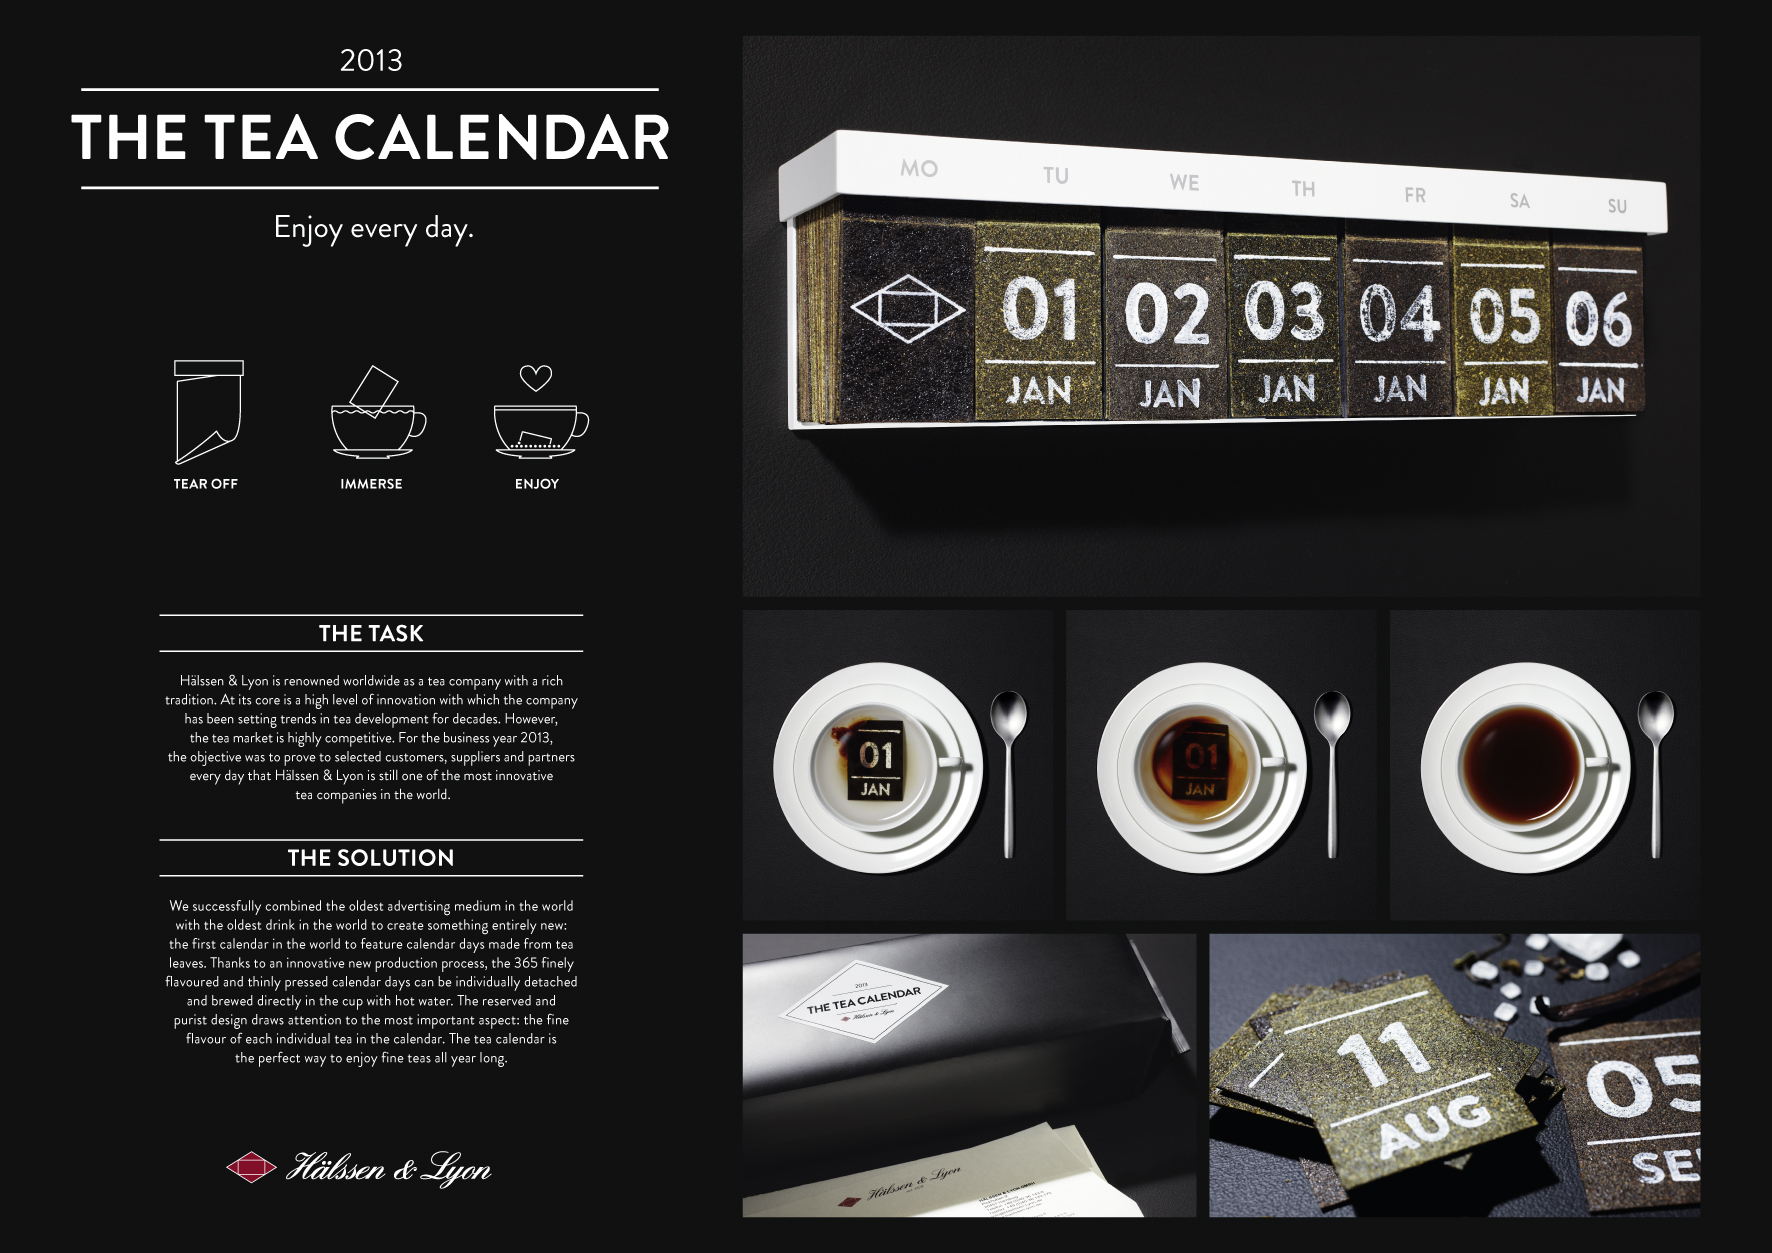 iF Design The Tea Calendar